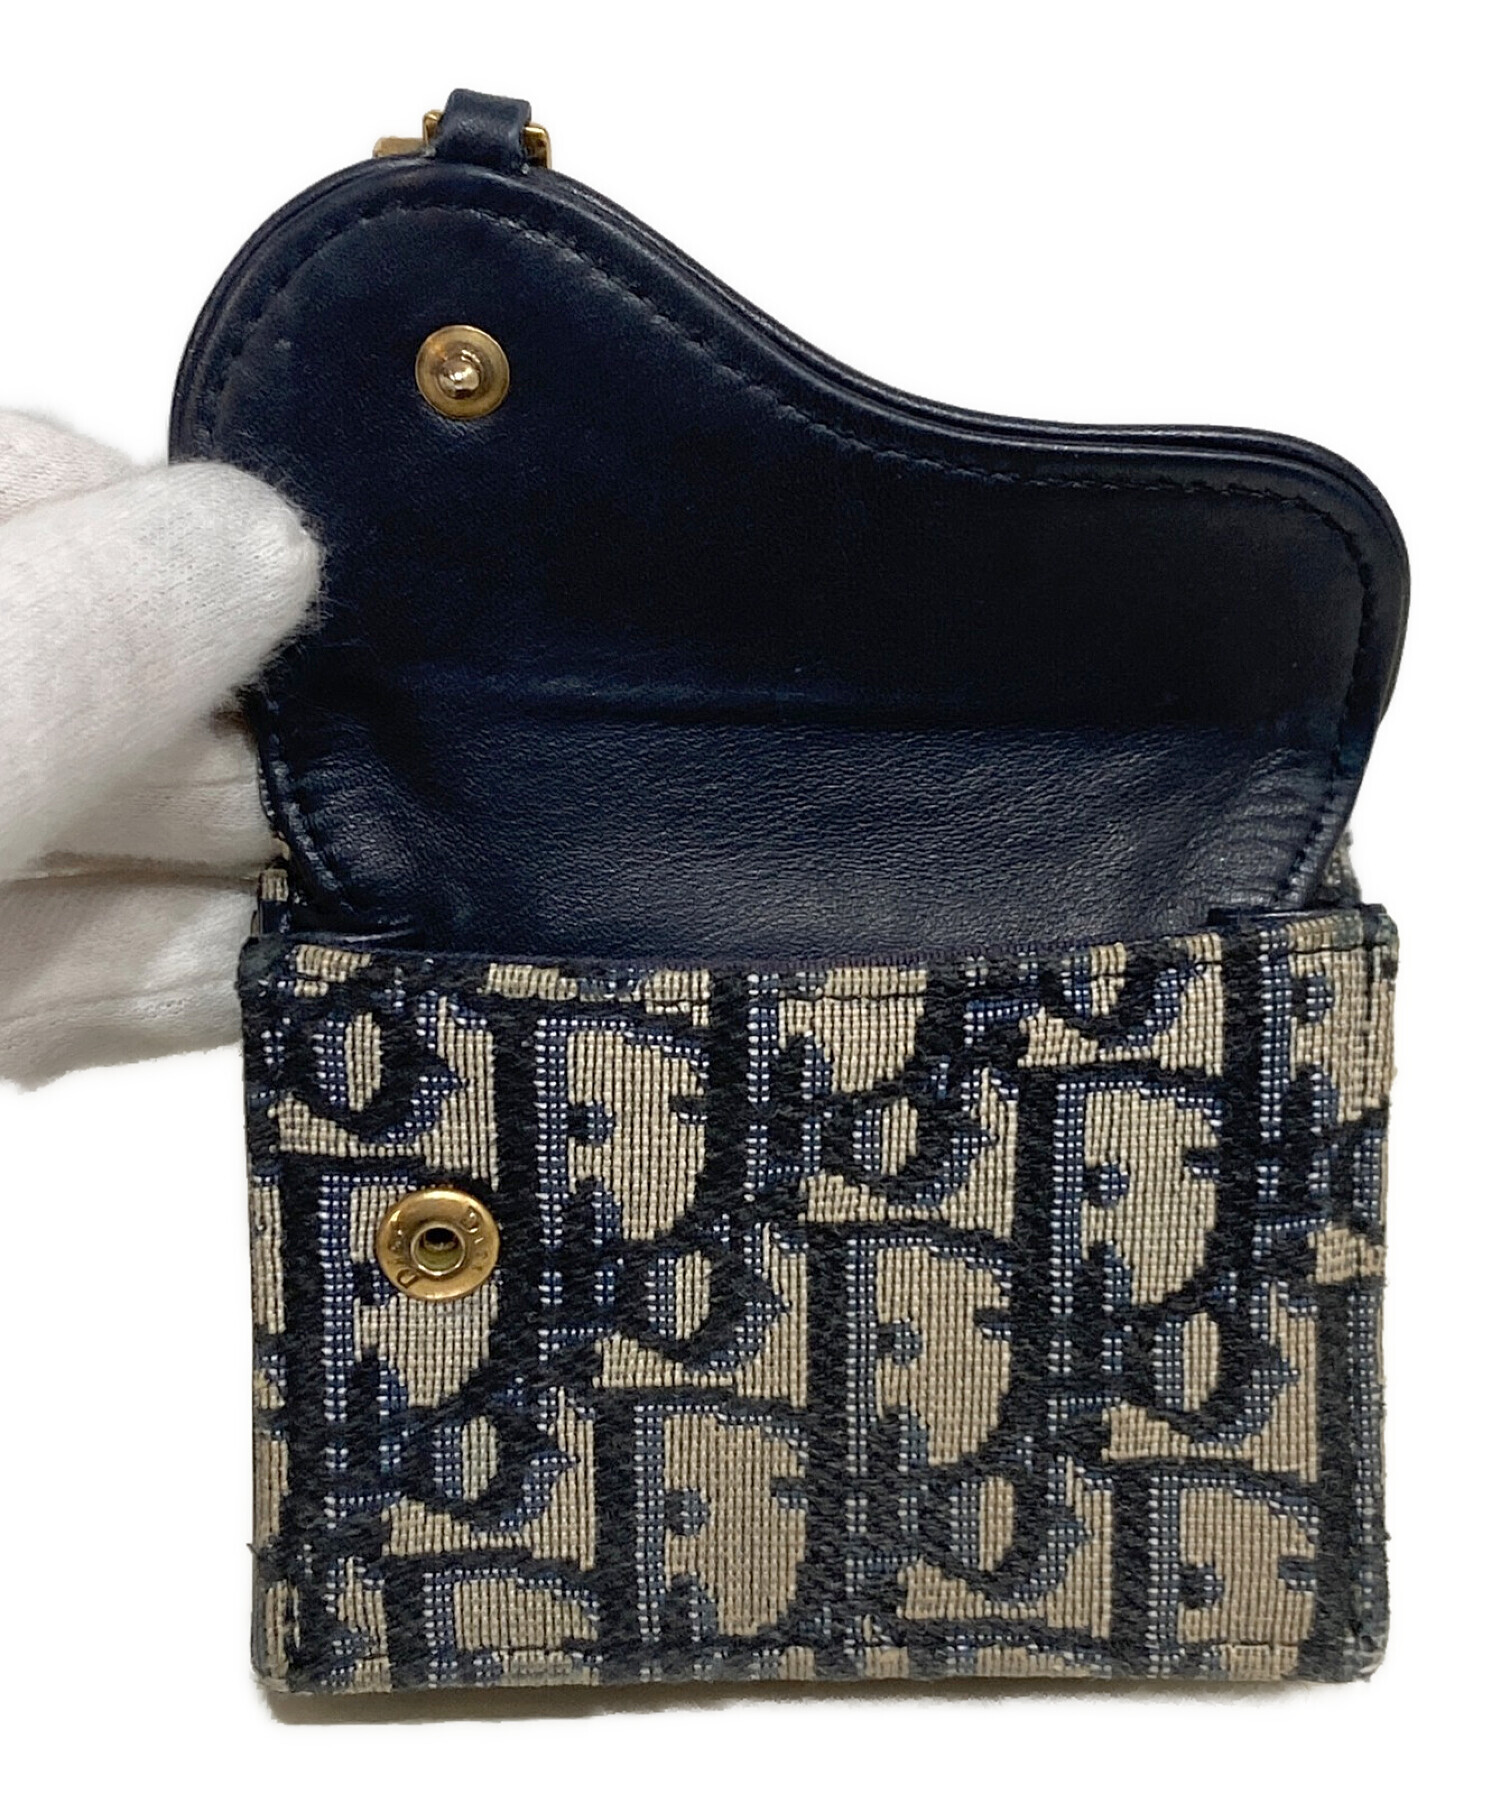 Christian Dior (クリスチャン ディオール) サドル ロータスウォレット 三つ折り財布 グレー×ネイビー